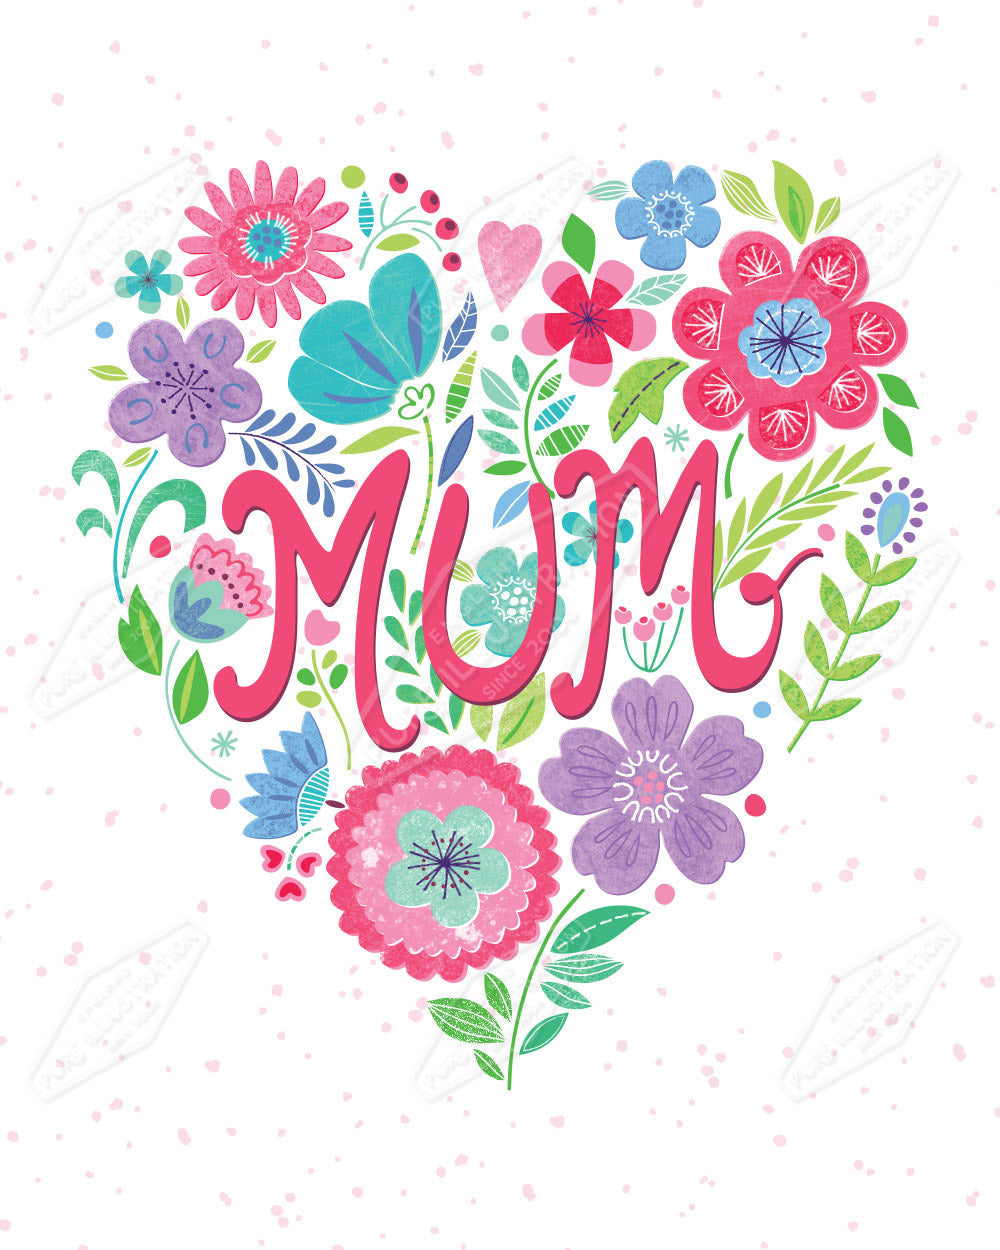 Mum / Mom Heart Design by Gill Eggleston for Pure Art Licensing Agency & Surface Design Studio